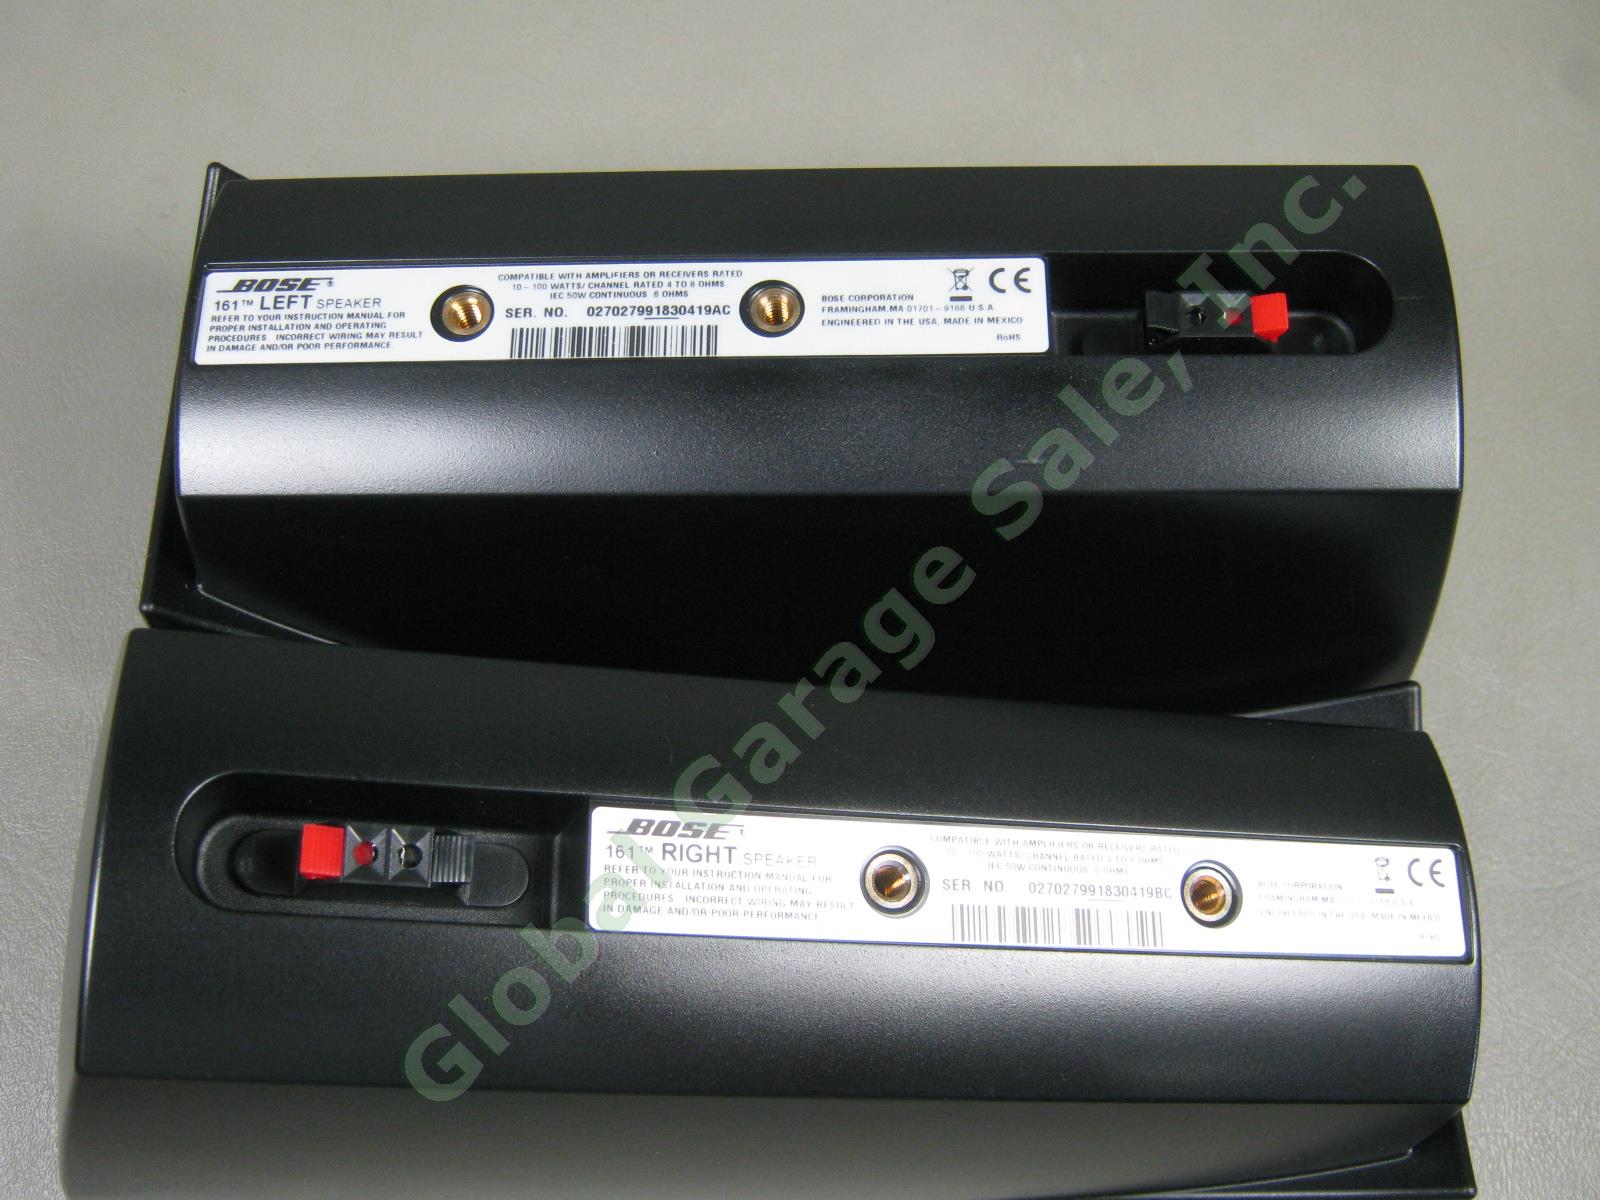 Black Pair Bose 161 Left Right Bookshelf Speaker System +Brackets Manual Box Lot 7